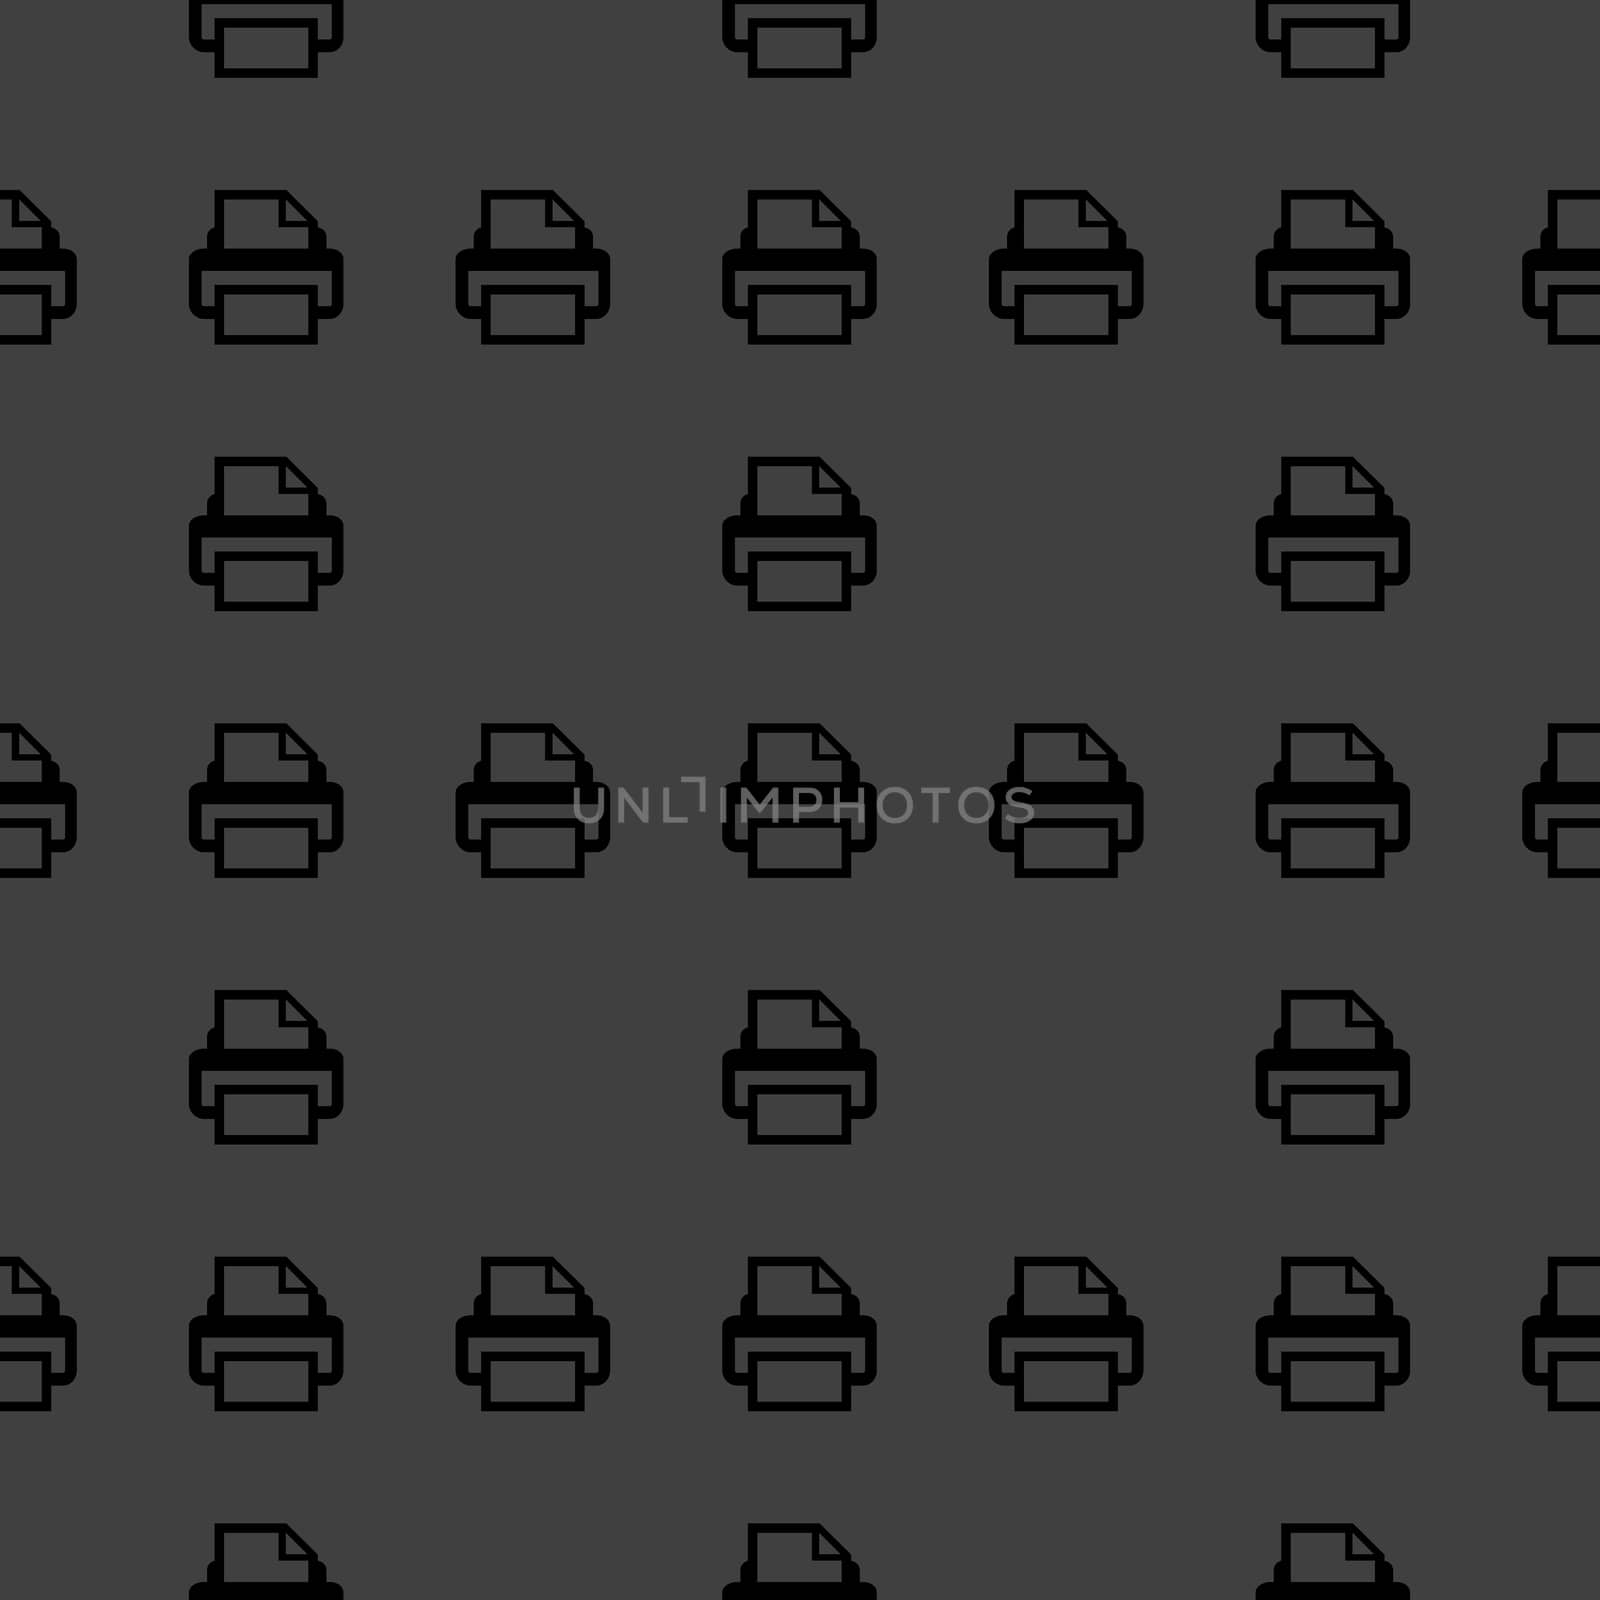 Printer web icon. flat design. Seamless pattern. by serhii_lohvyniuk